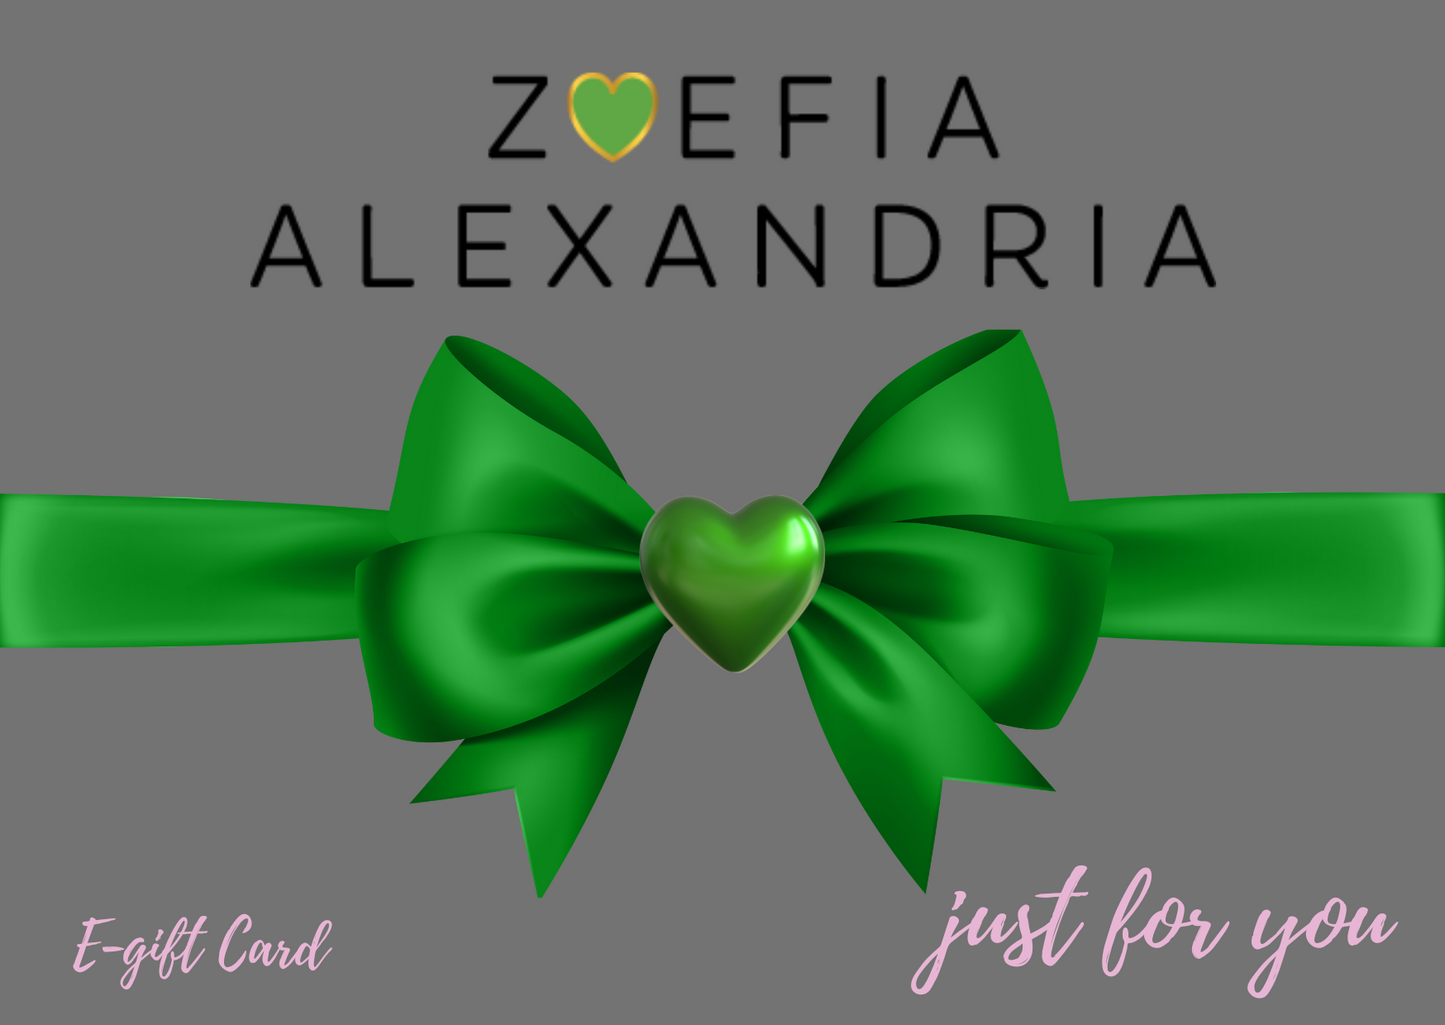 Zoefia Alexandria E-Gift Card